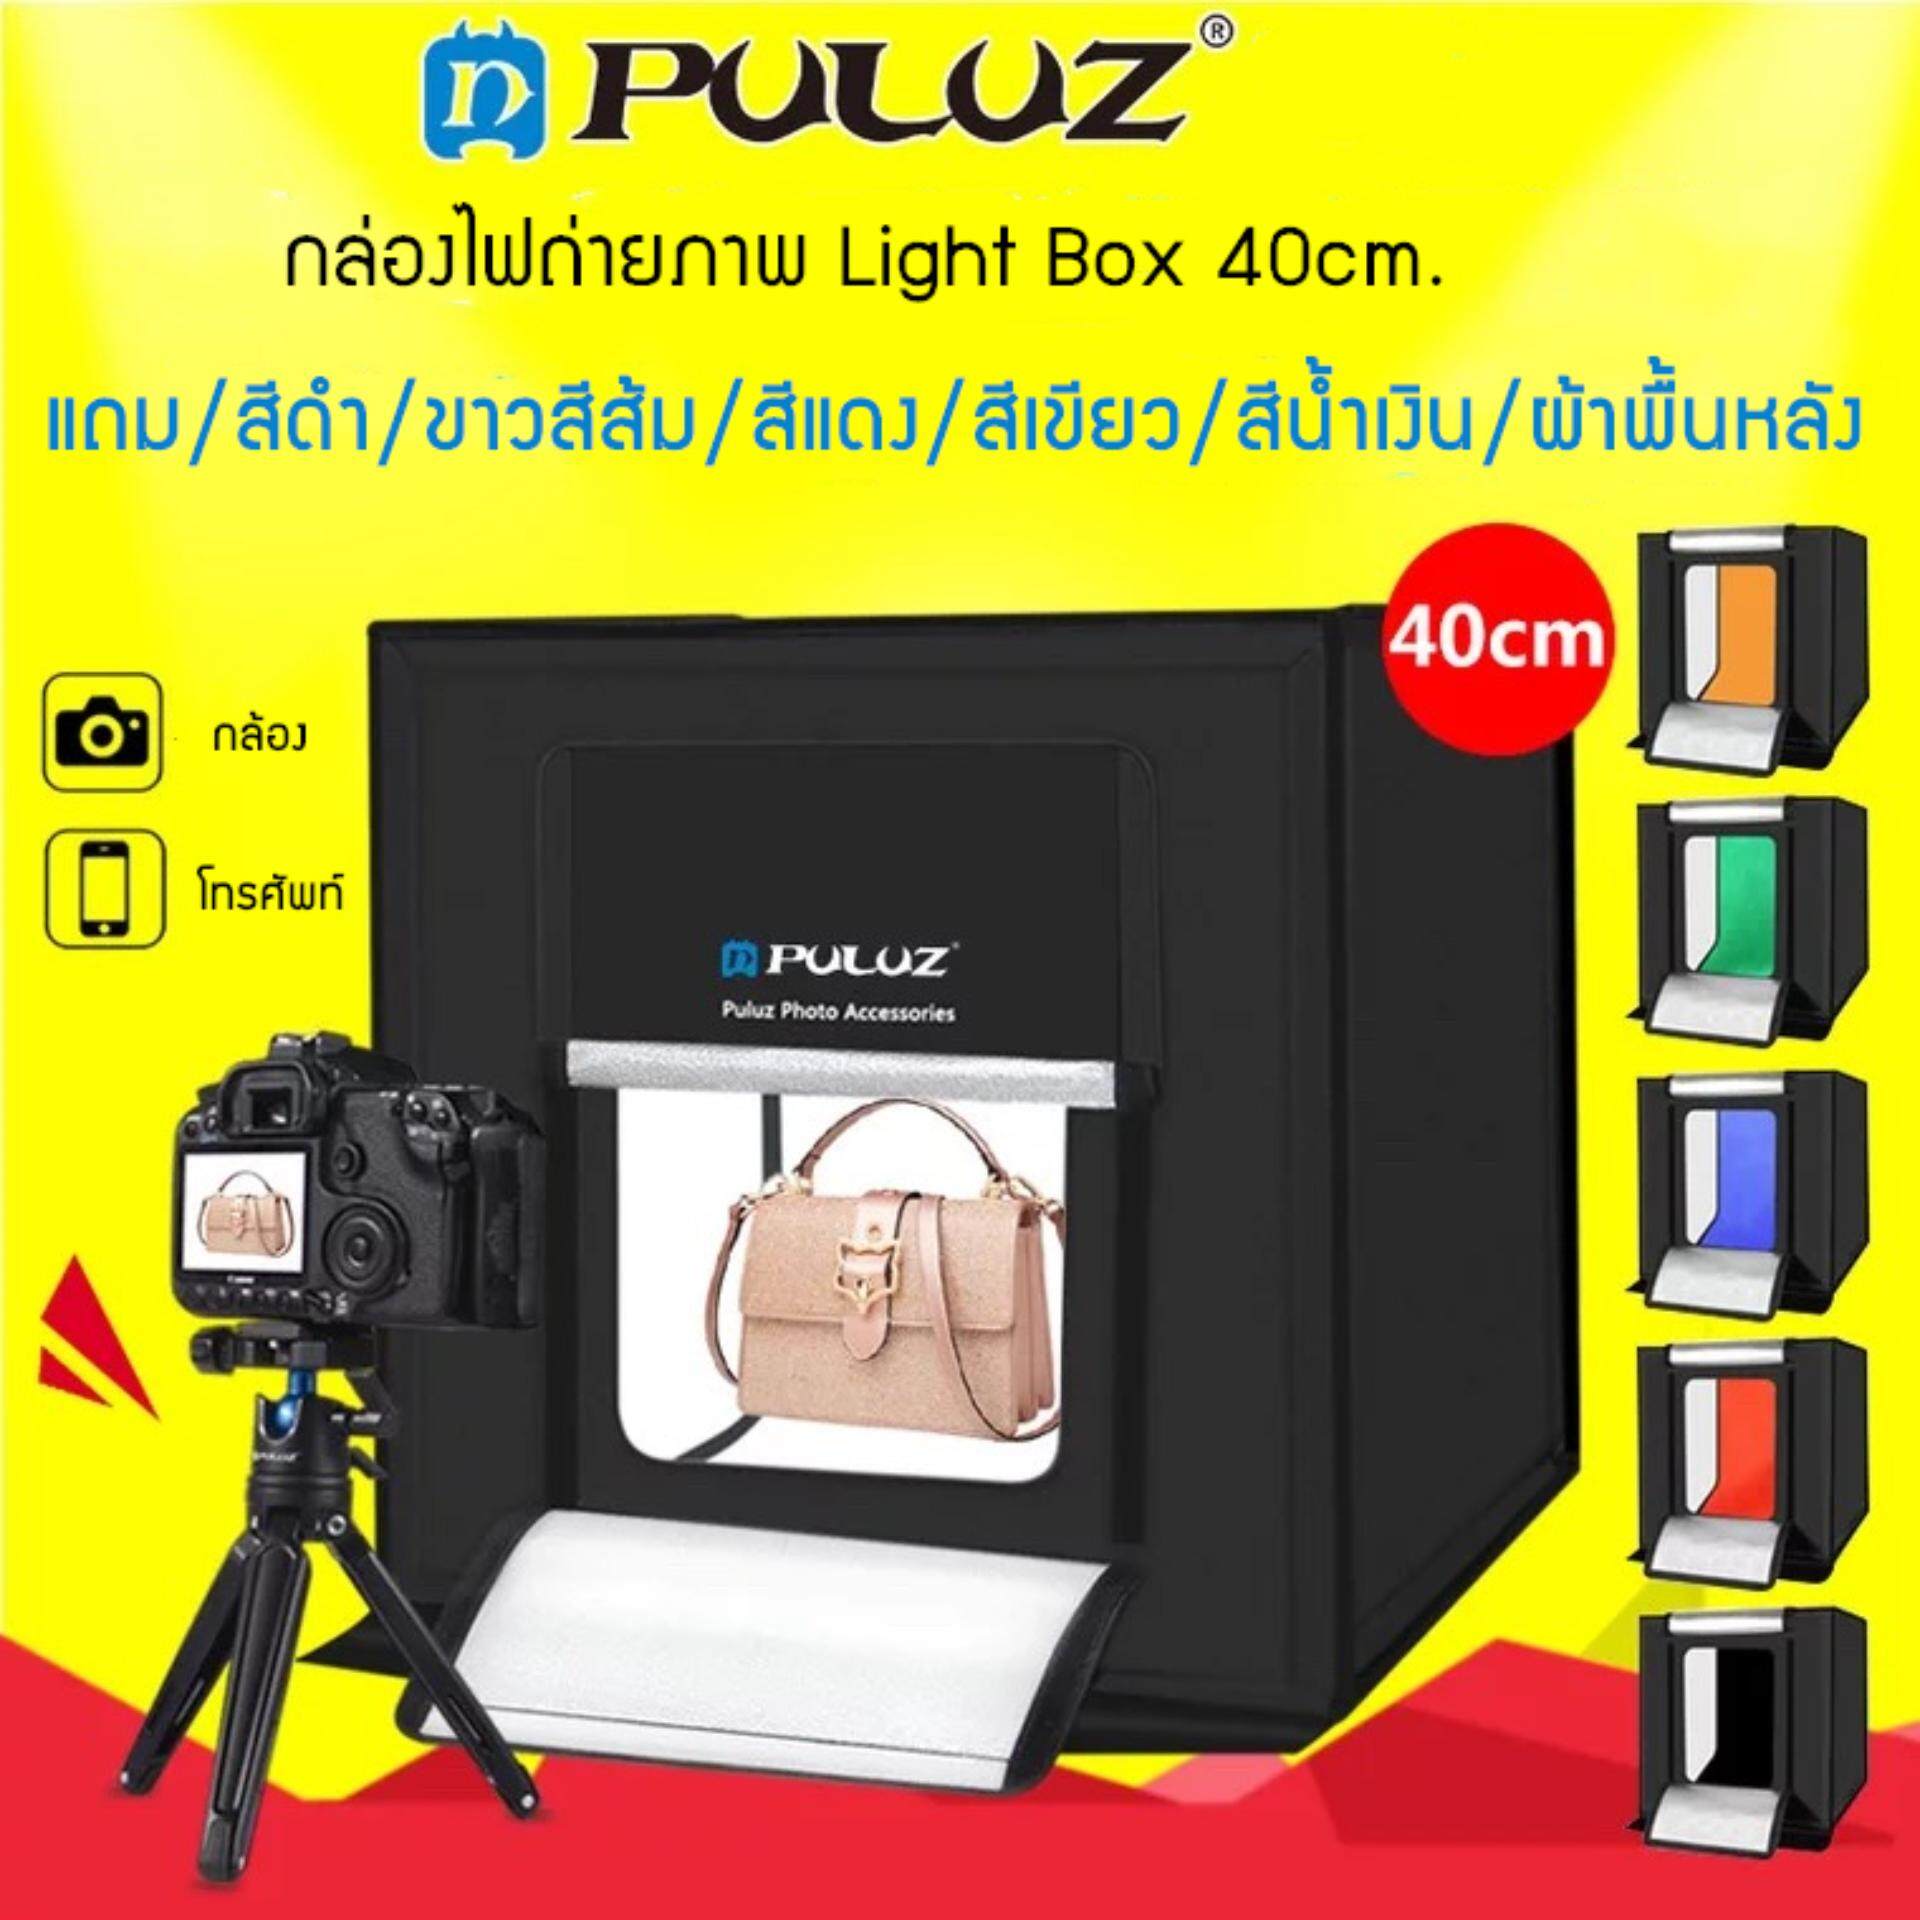 PULUZ กล่องไฟถ่ายภาพ Light Box 40 cm. สตูดิโอถ่ายภาพ กล่องถ่ายรูปสินค้า 40ซม กล่องสำหรับถ่ายภาพสินค้า พร้อมไฟ LED ปรับไฟได้.Studio Box led